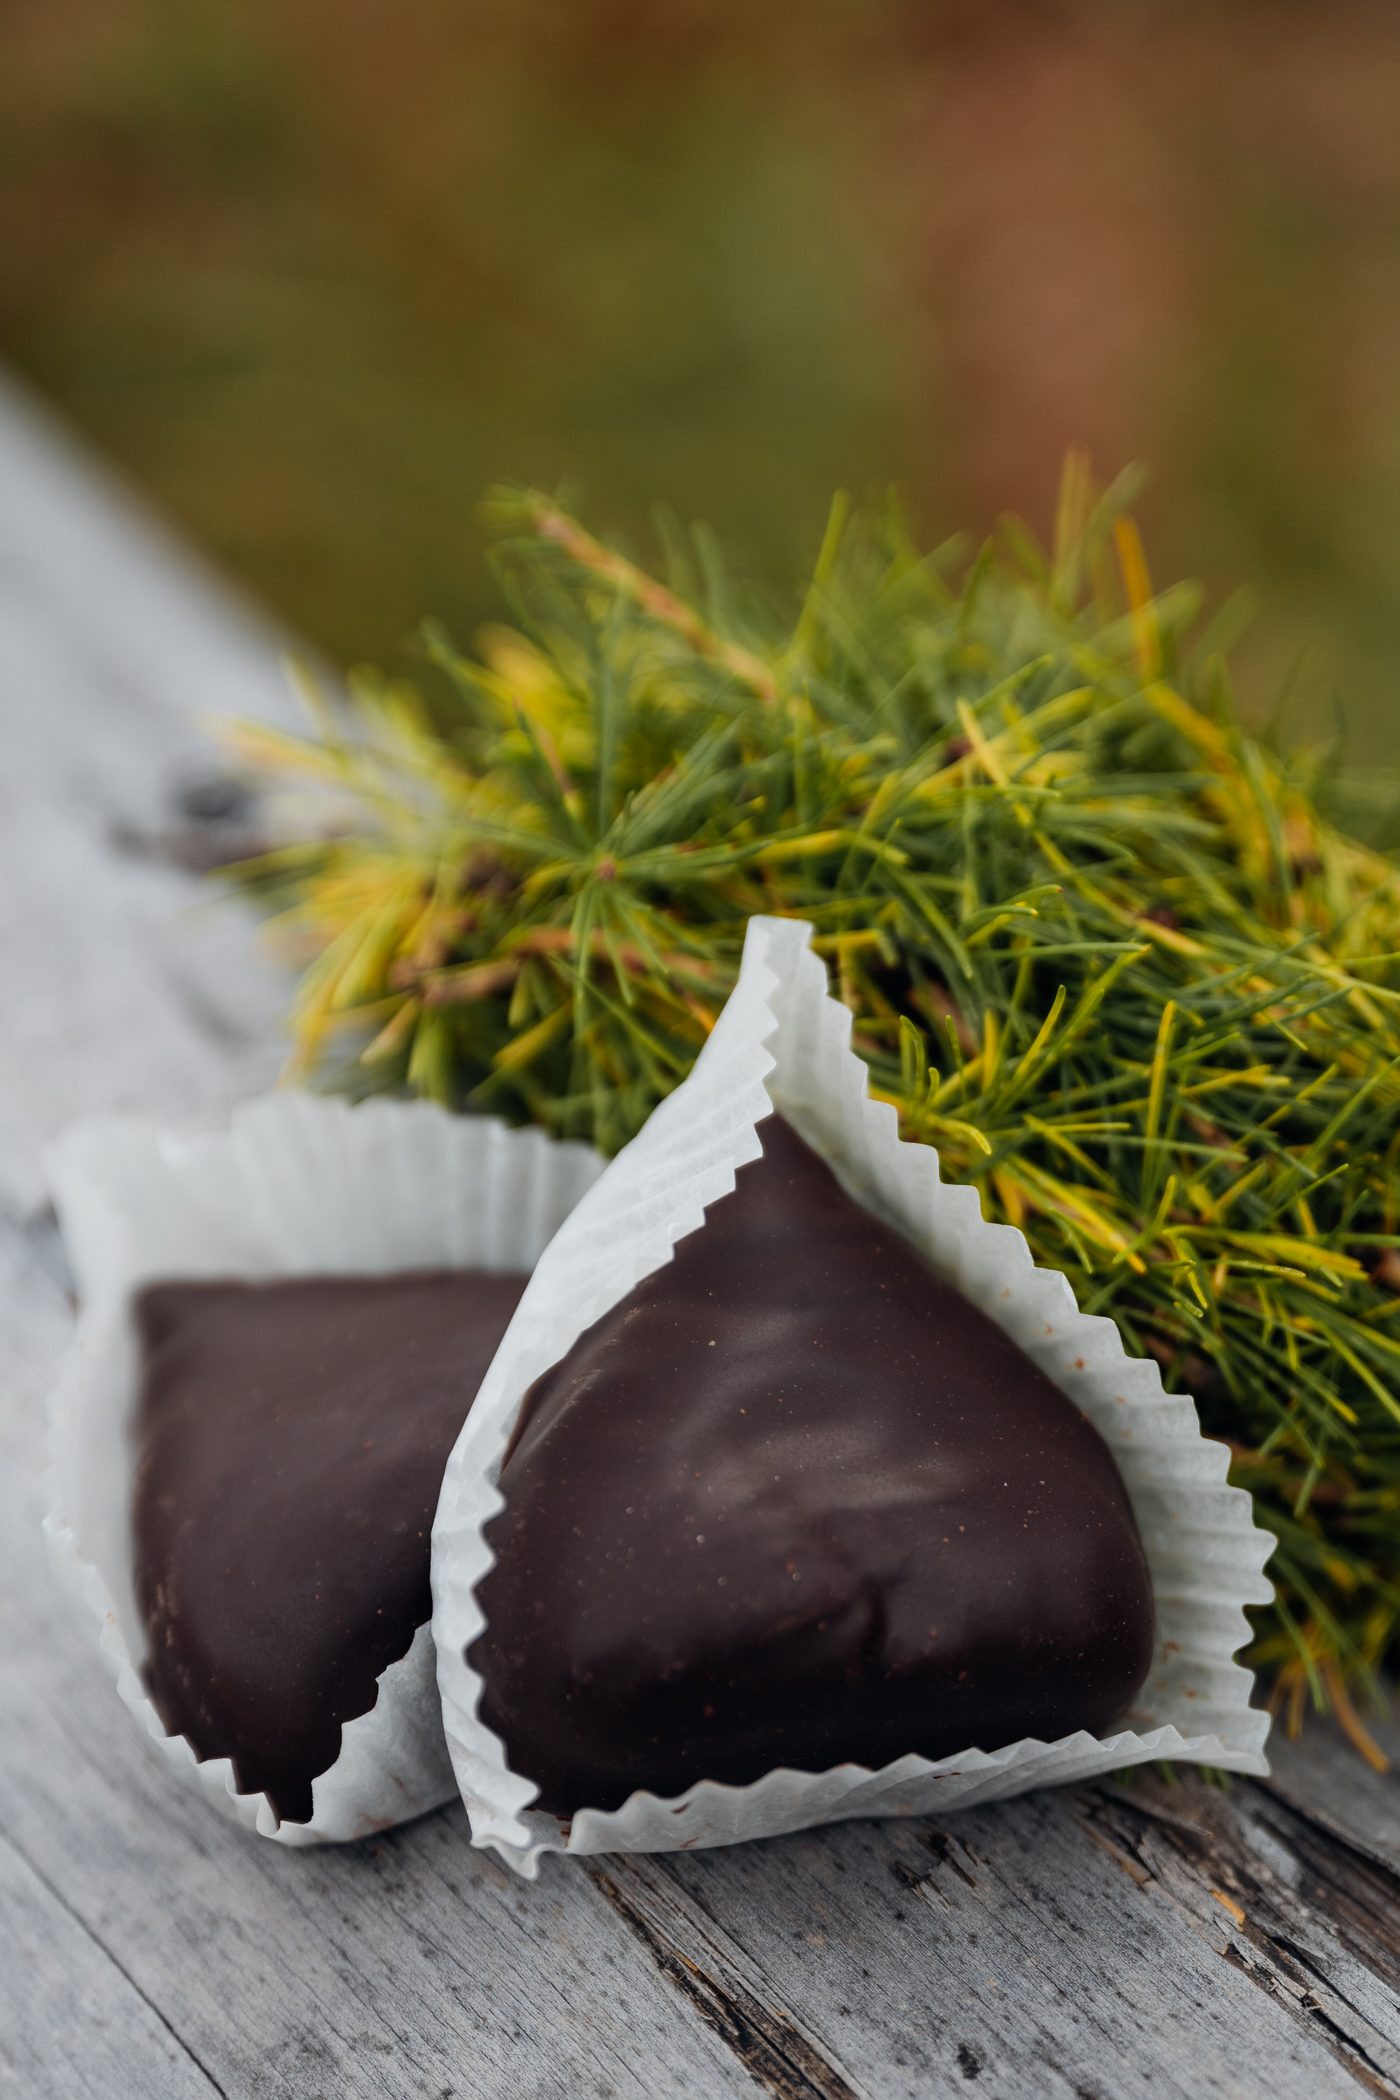 Chestnut chocolate Praline from Lana South Tyrol